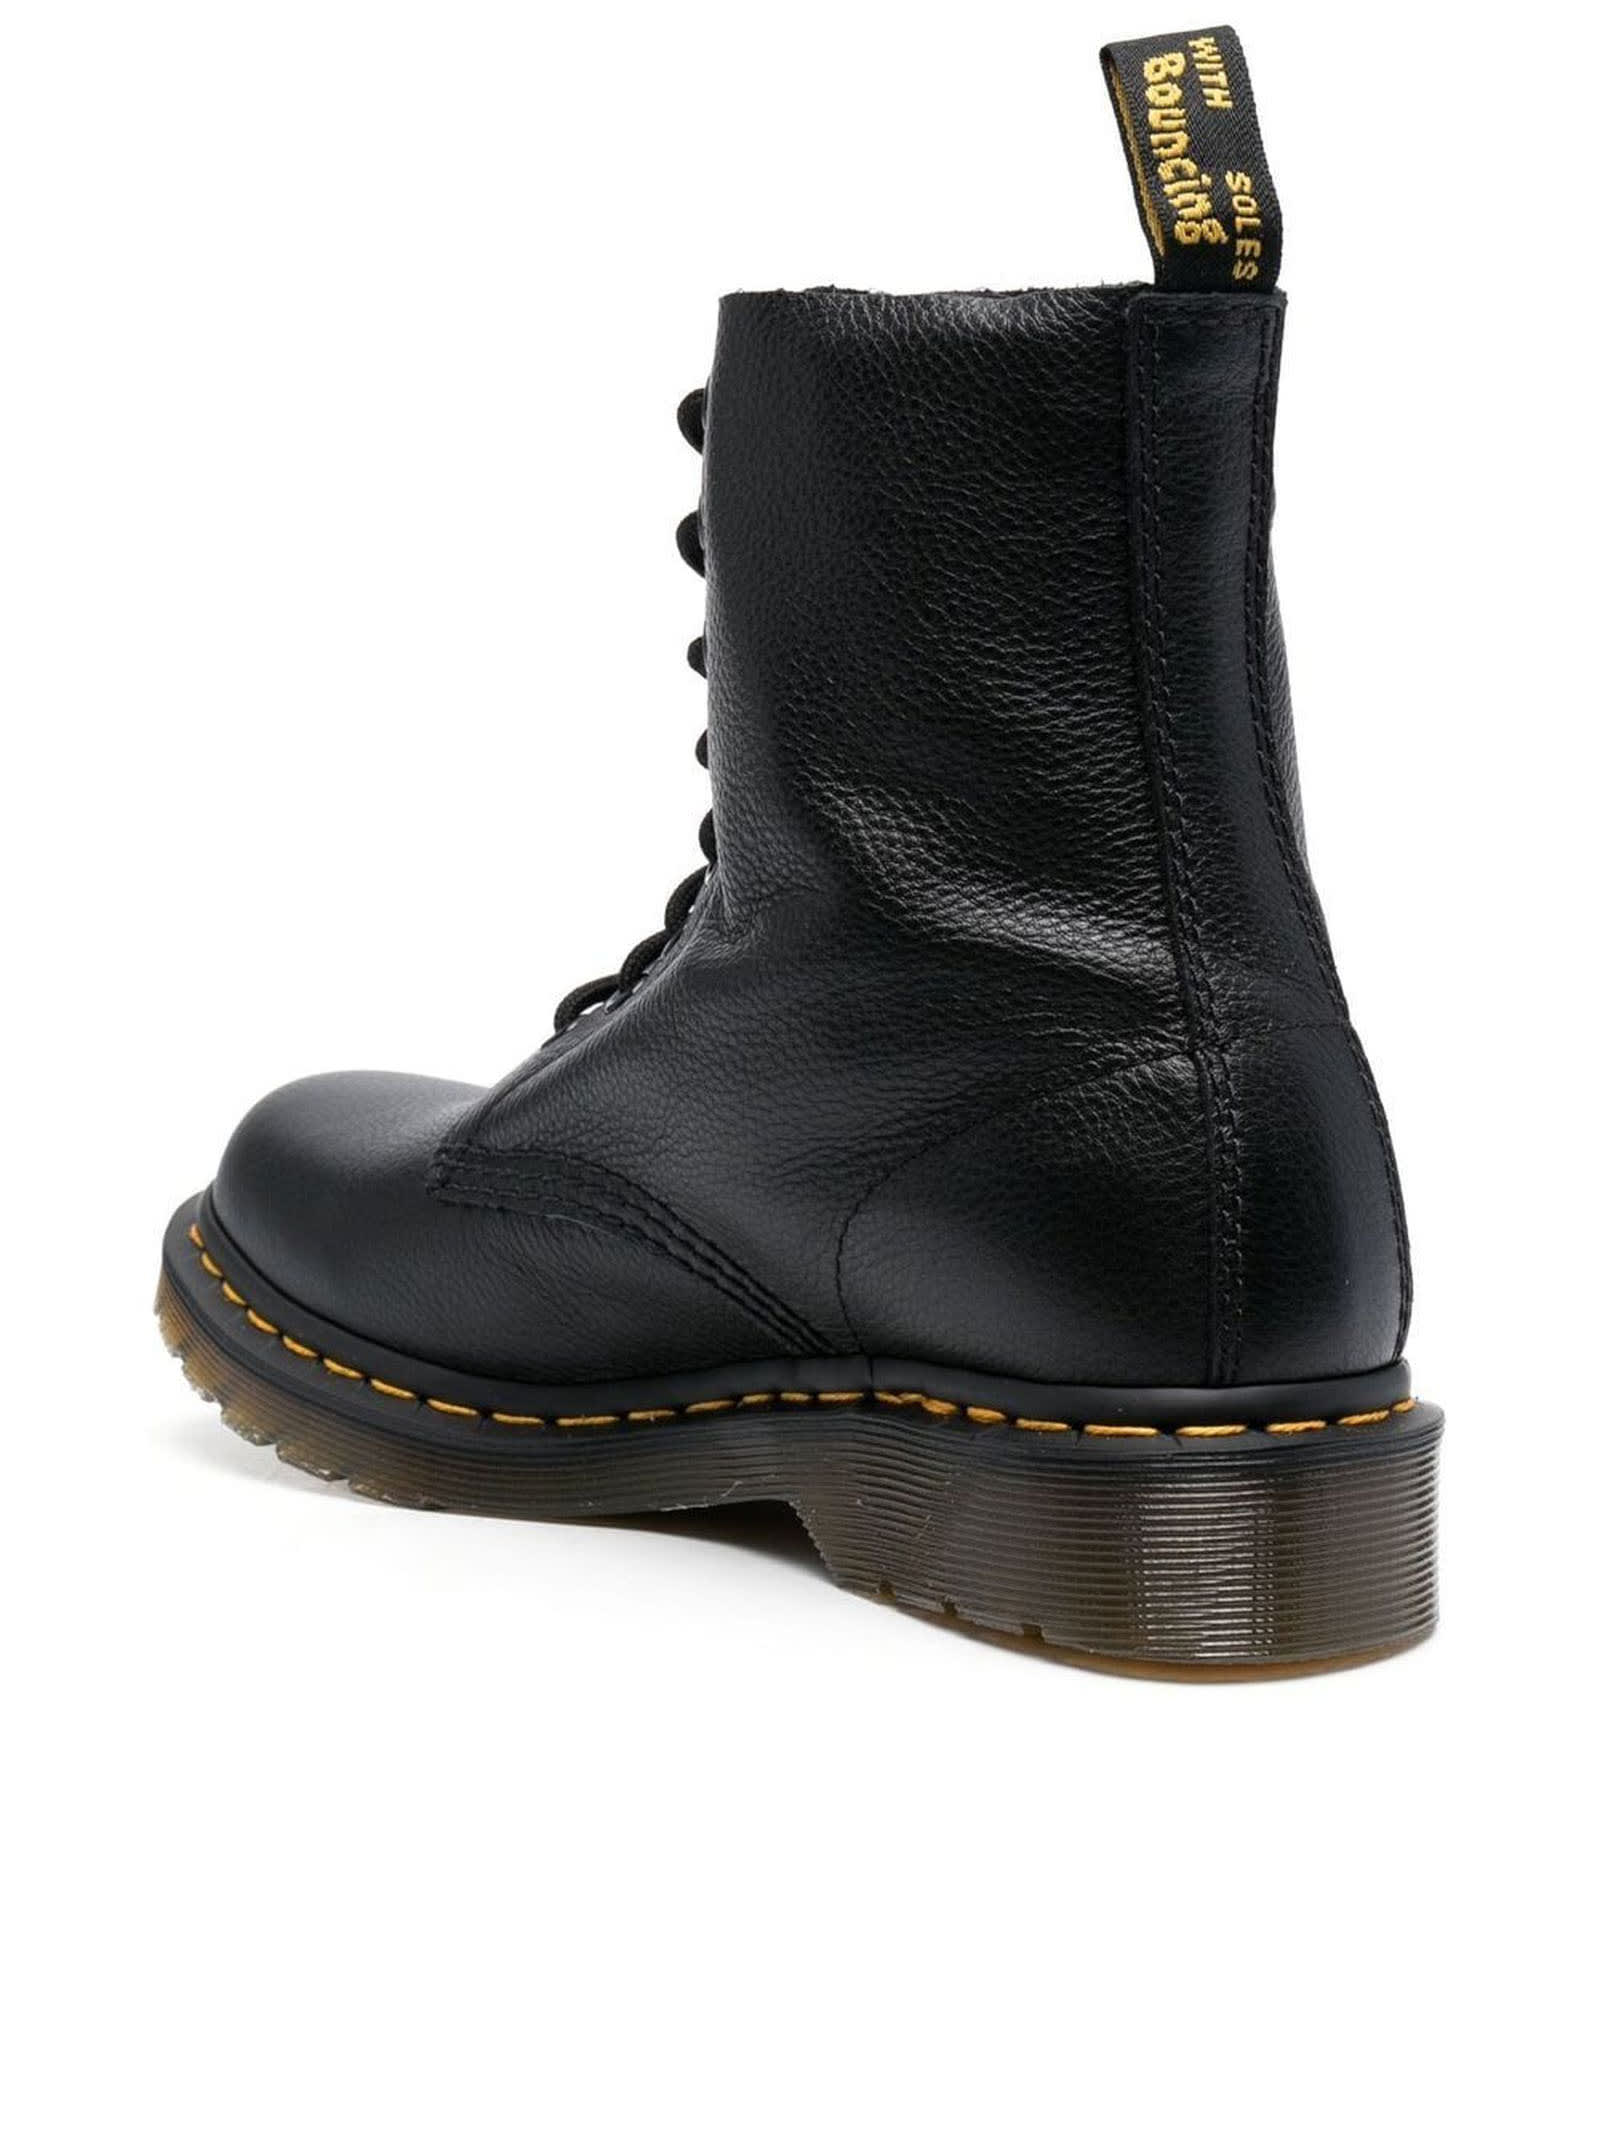 Shop Dr. Martens' Black Leather Pascal Virginia Boots